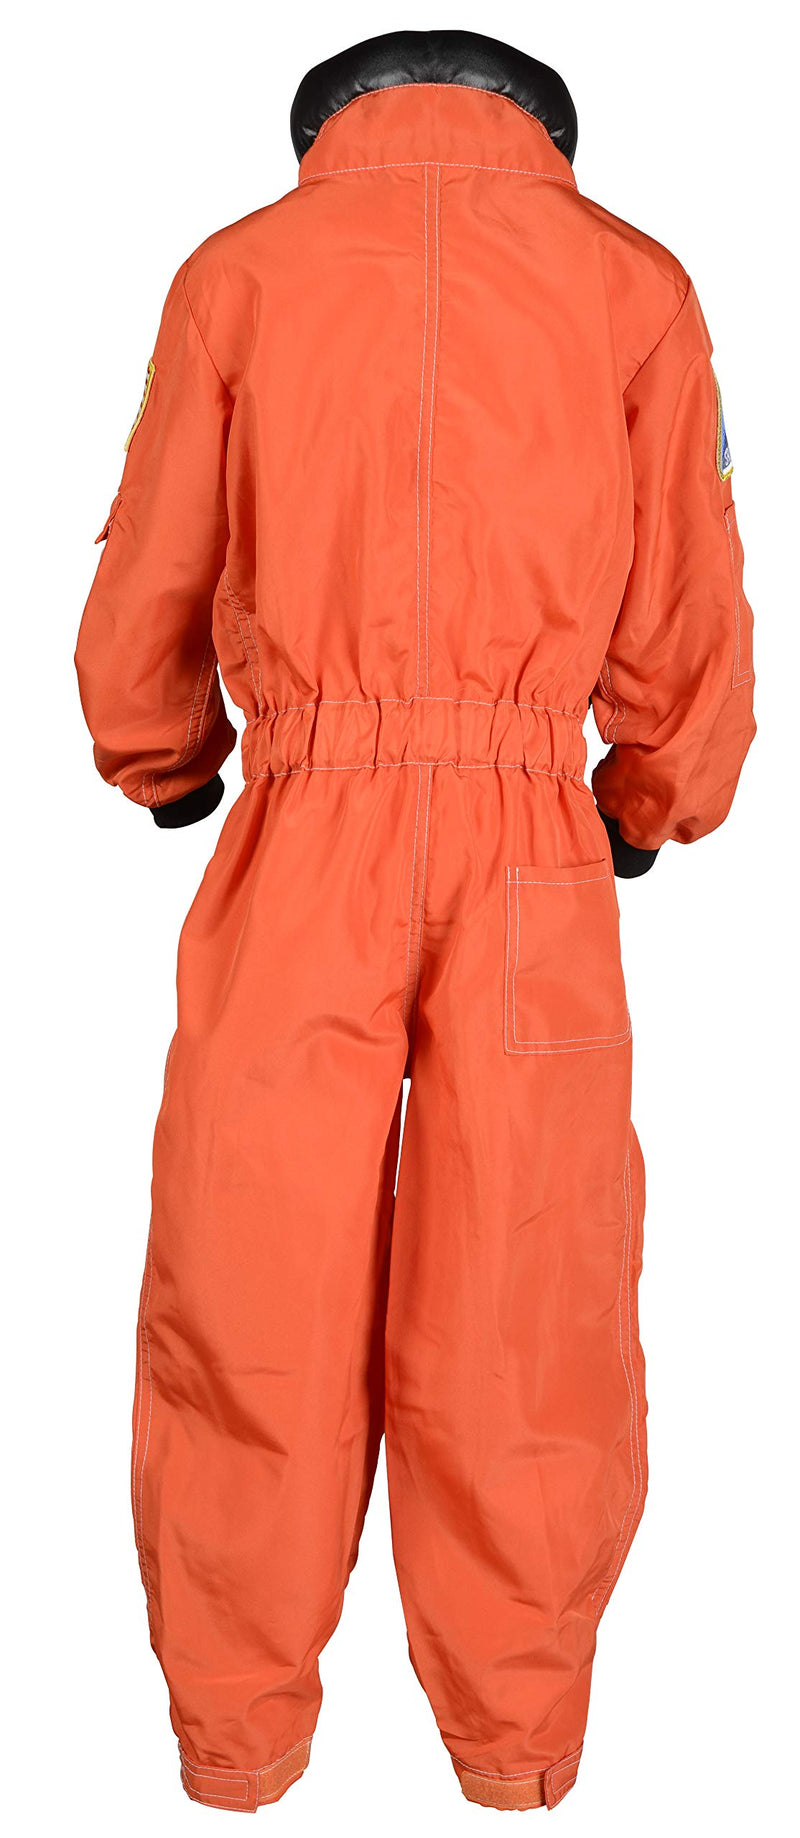 [Australia] - Aeromax Jr. Astronaut Suit with Cap 18 Months Orange 